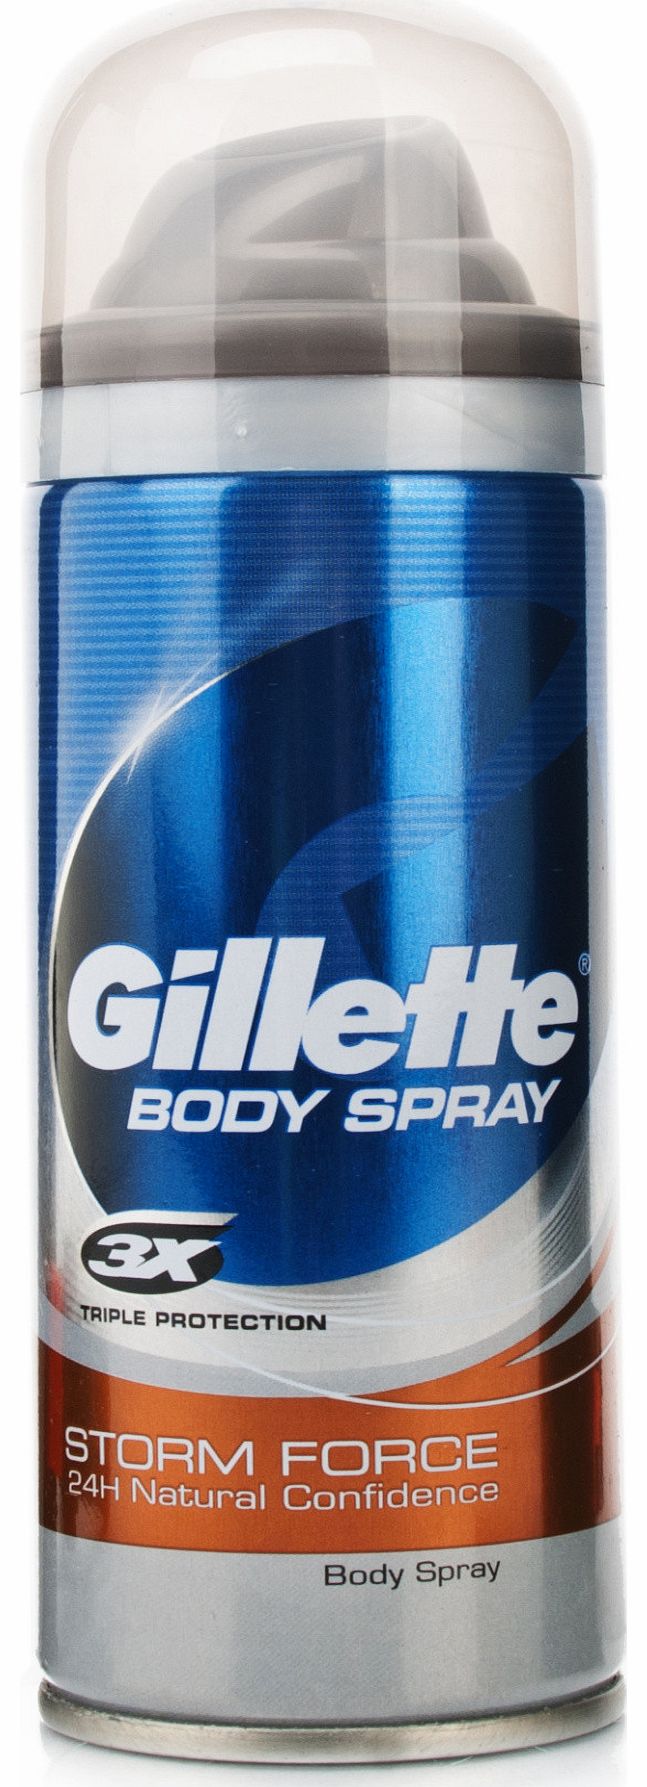 Gillette Storm Force Body Spray